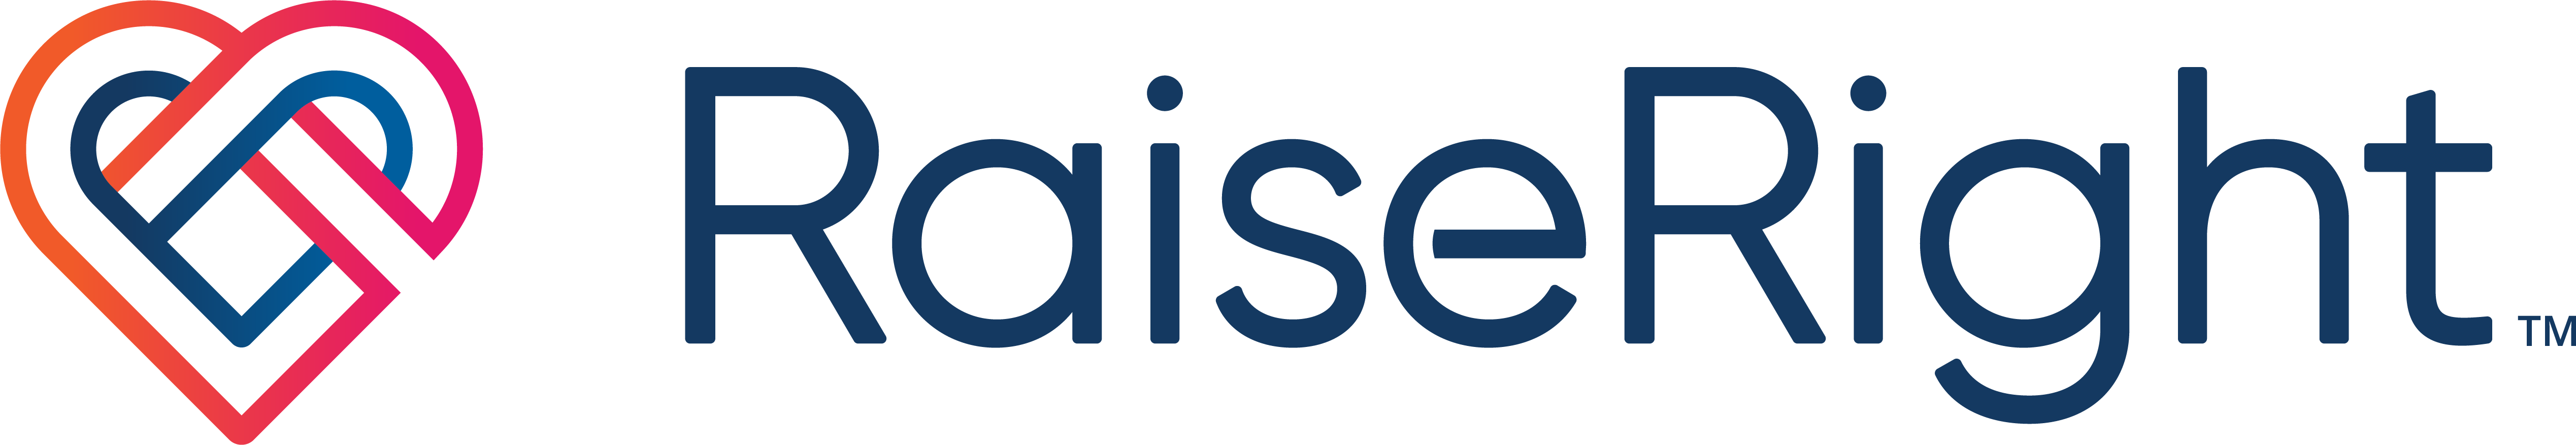 RaiseRight Logo